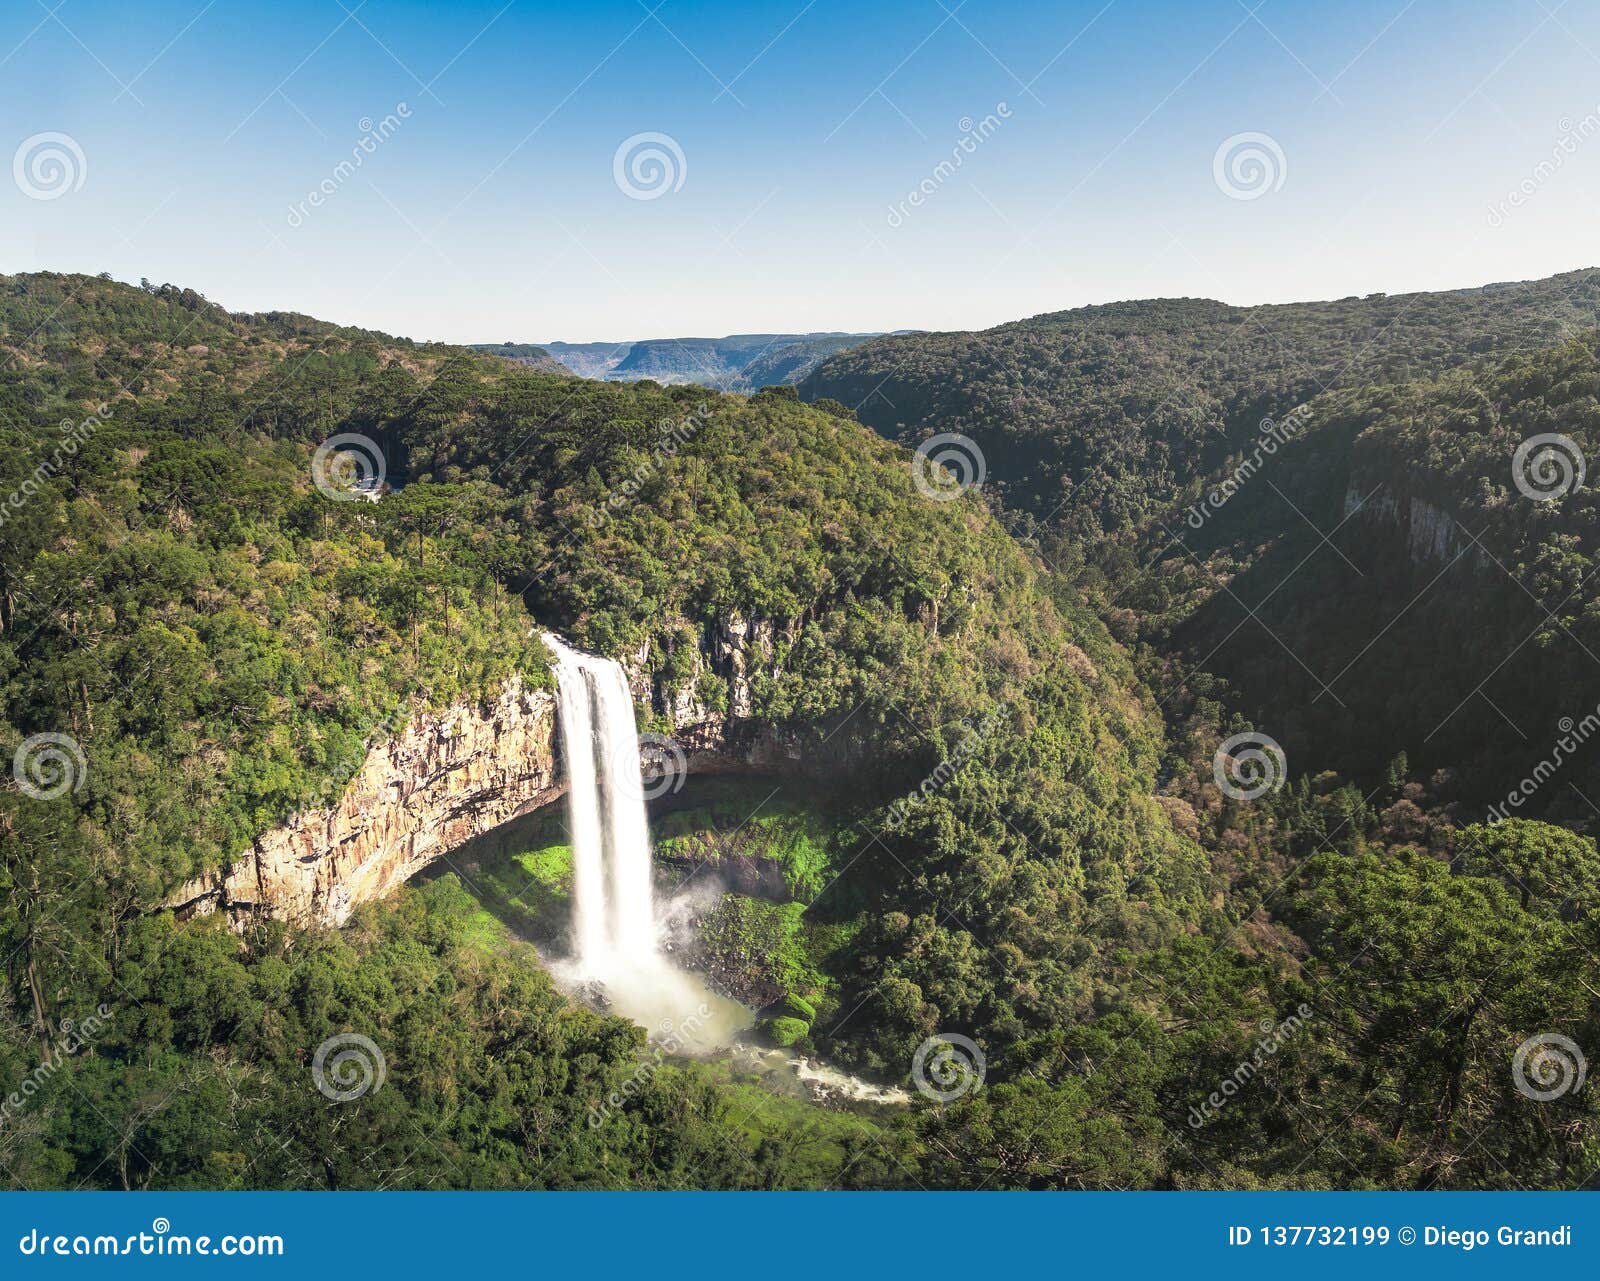 aerial view of caracol waterfall - canela, rio grande do sul, brazil